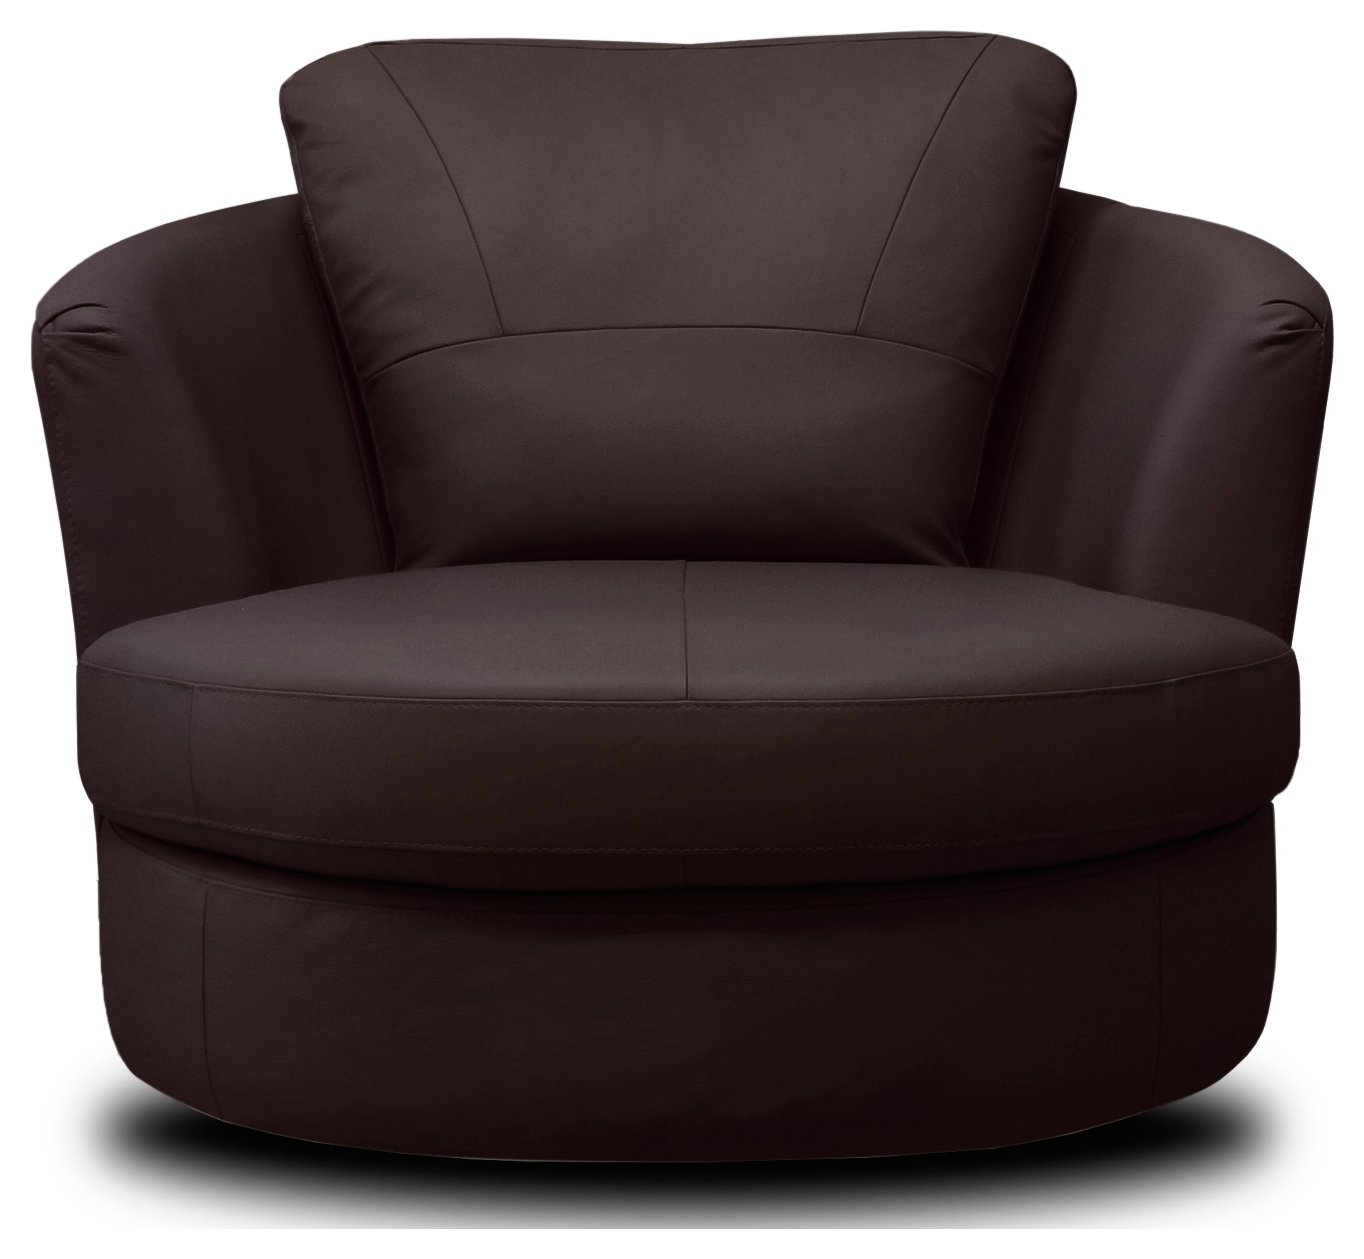 Argos Home Milano Leather Swivel Chair - Chocolate